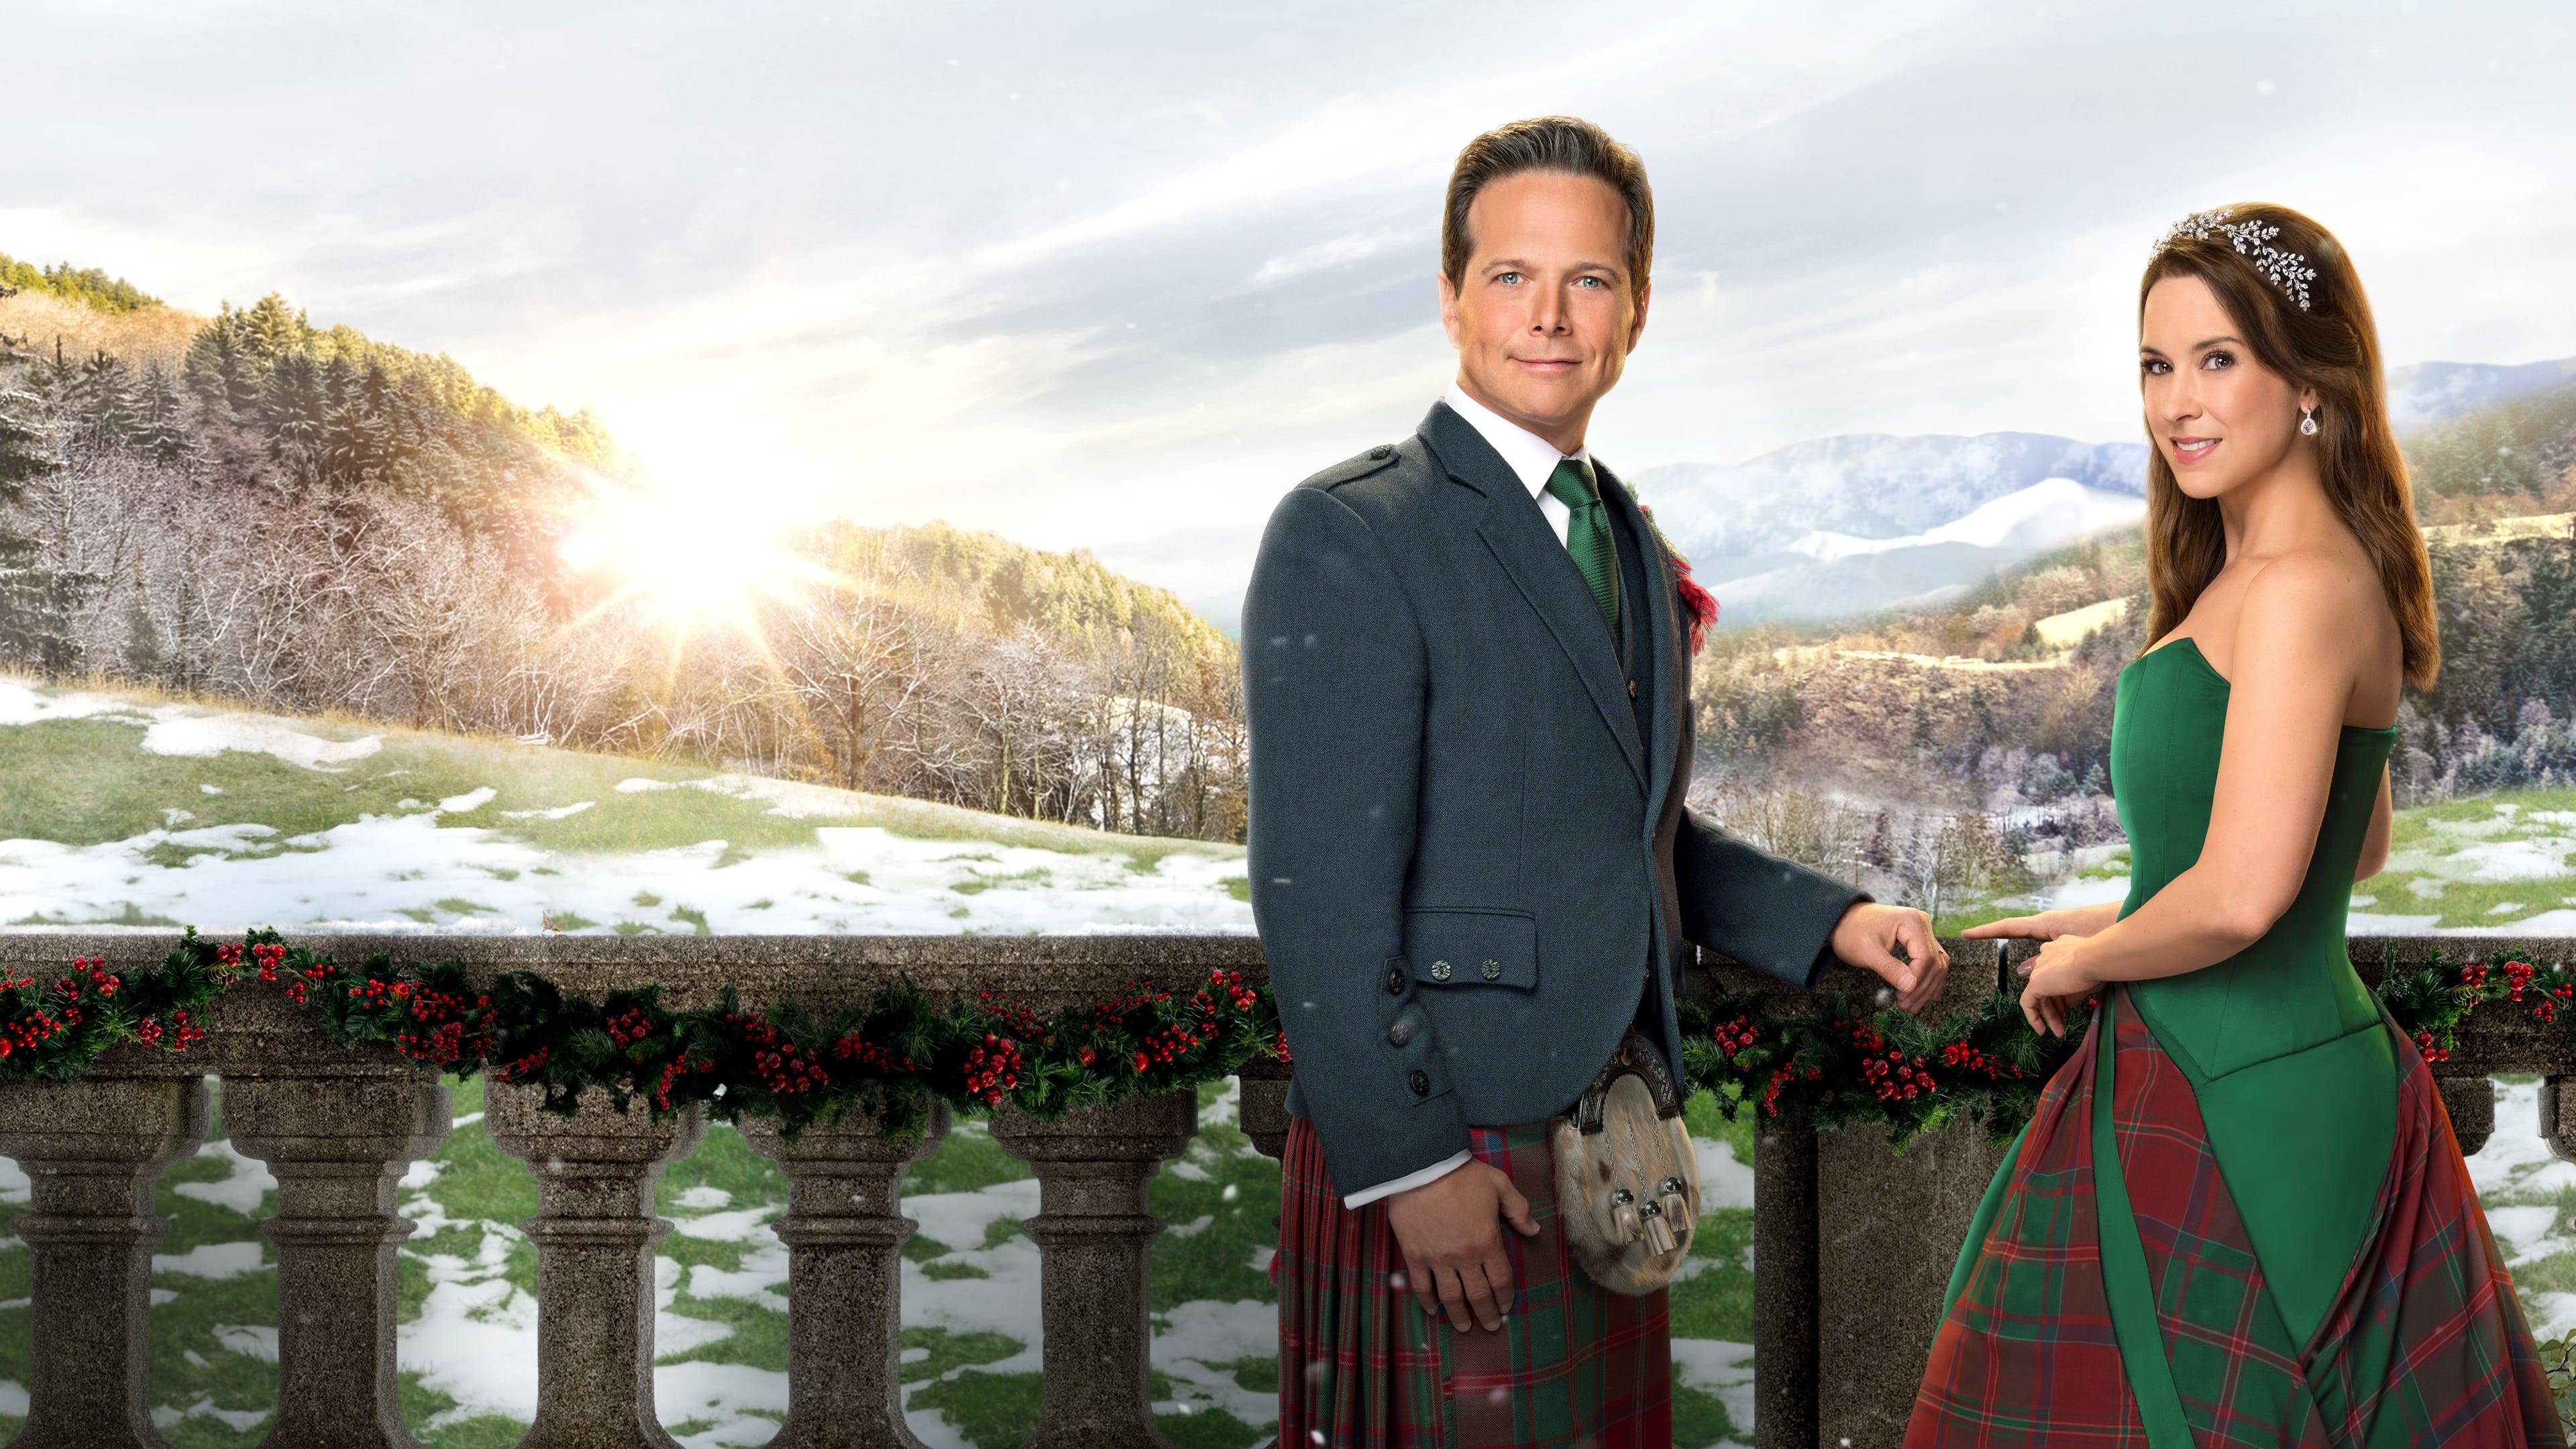 A Merry Scottish Christmas backdrop